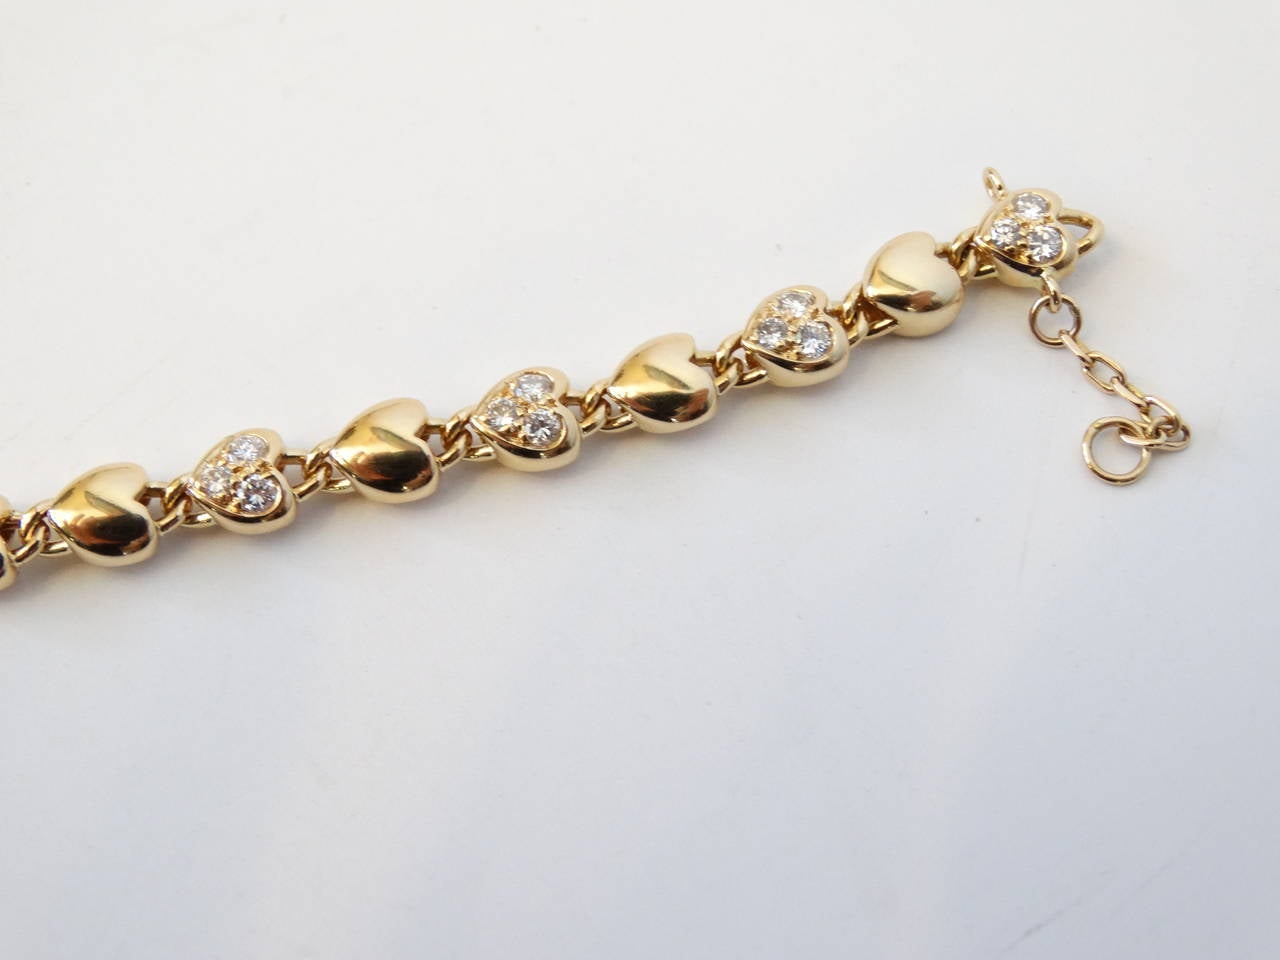 Women's CARTIER 18k Yellow Gold Heart Link Bracelet with Diamonds